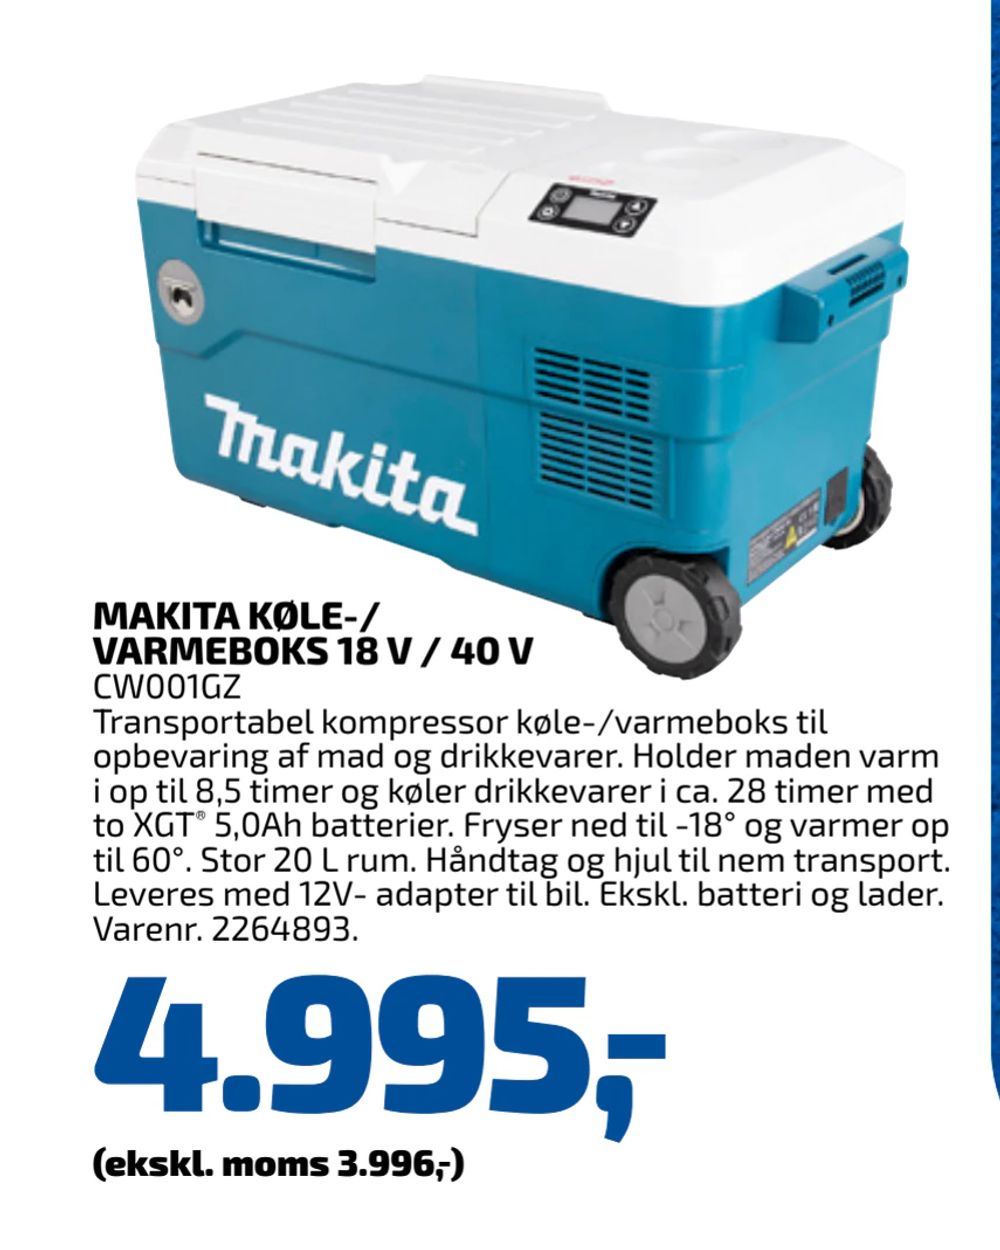 Tilbud på MAKITA KØLE-/ VARMEBOKS 18 V / 40 V fra Davidsen til 4.995 kr.